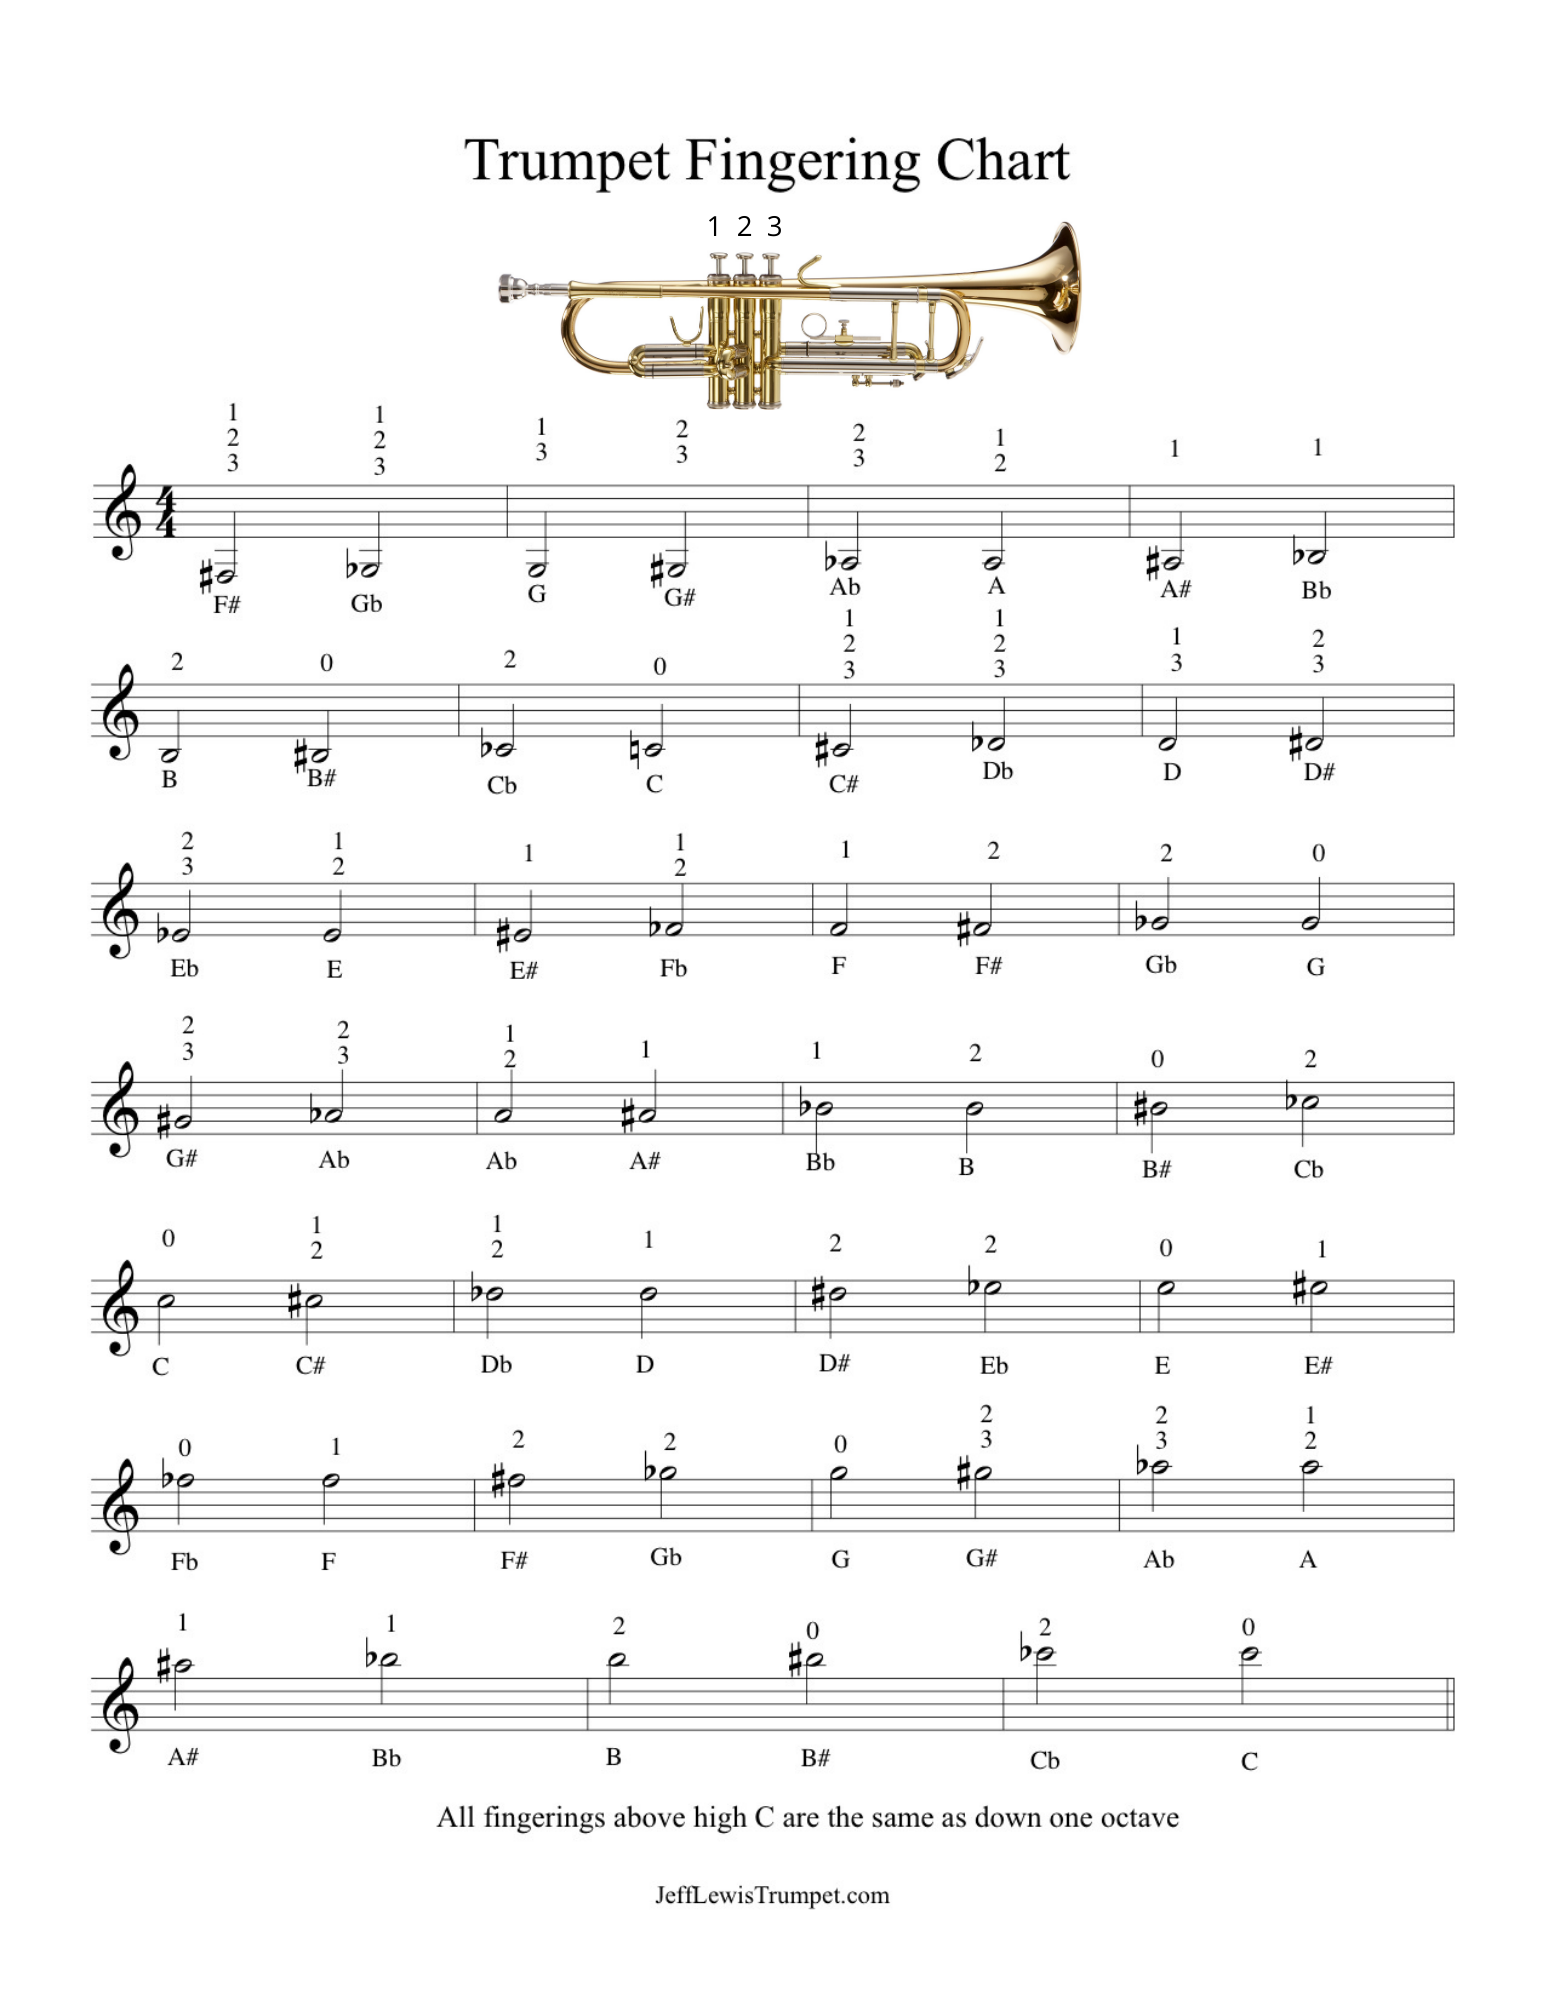 Trumpet Fingering Chart Jeff Lewis Trumpet